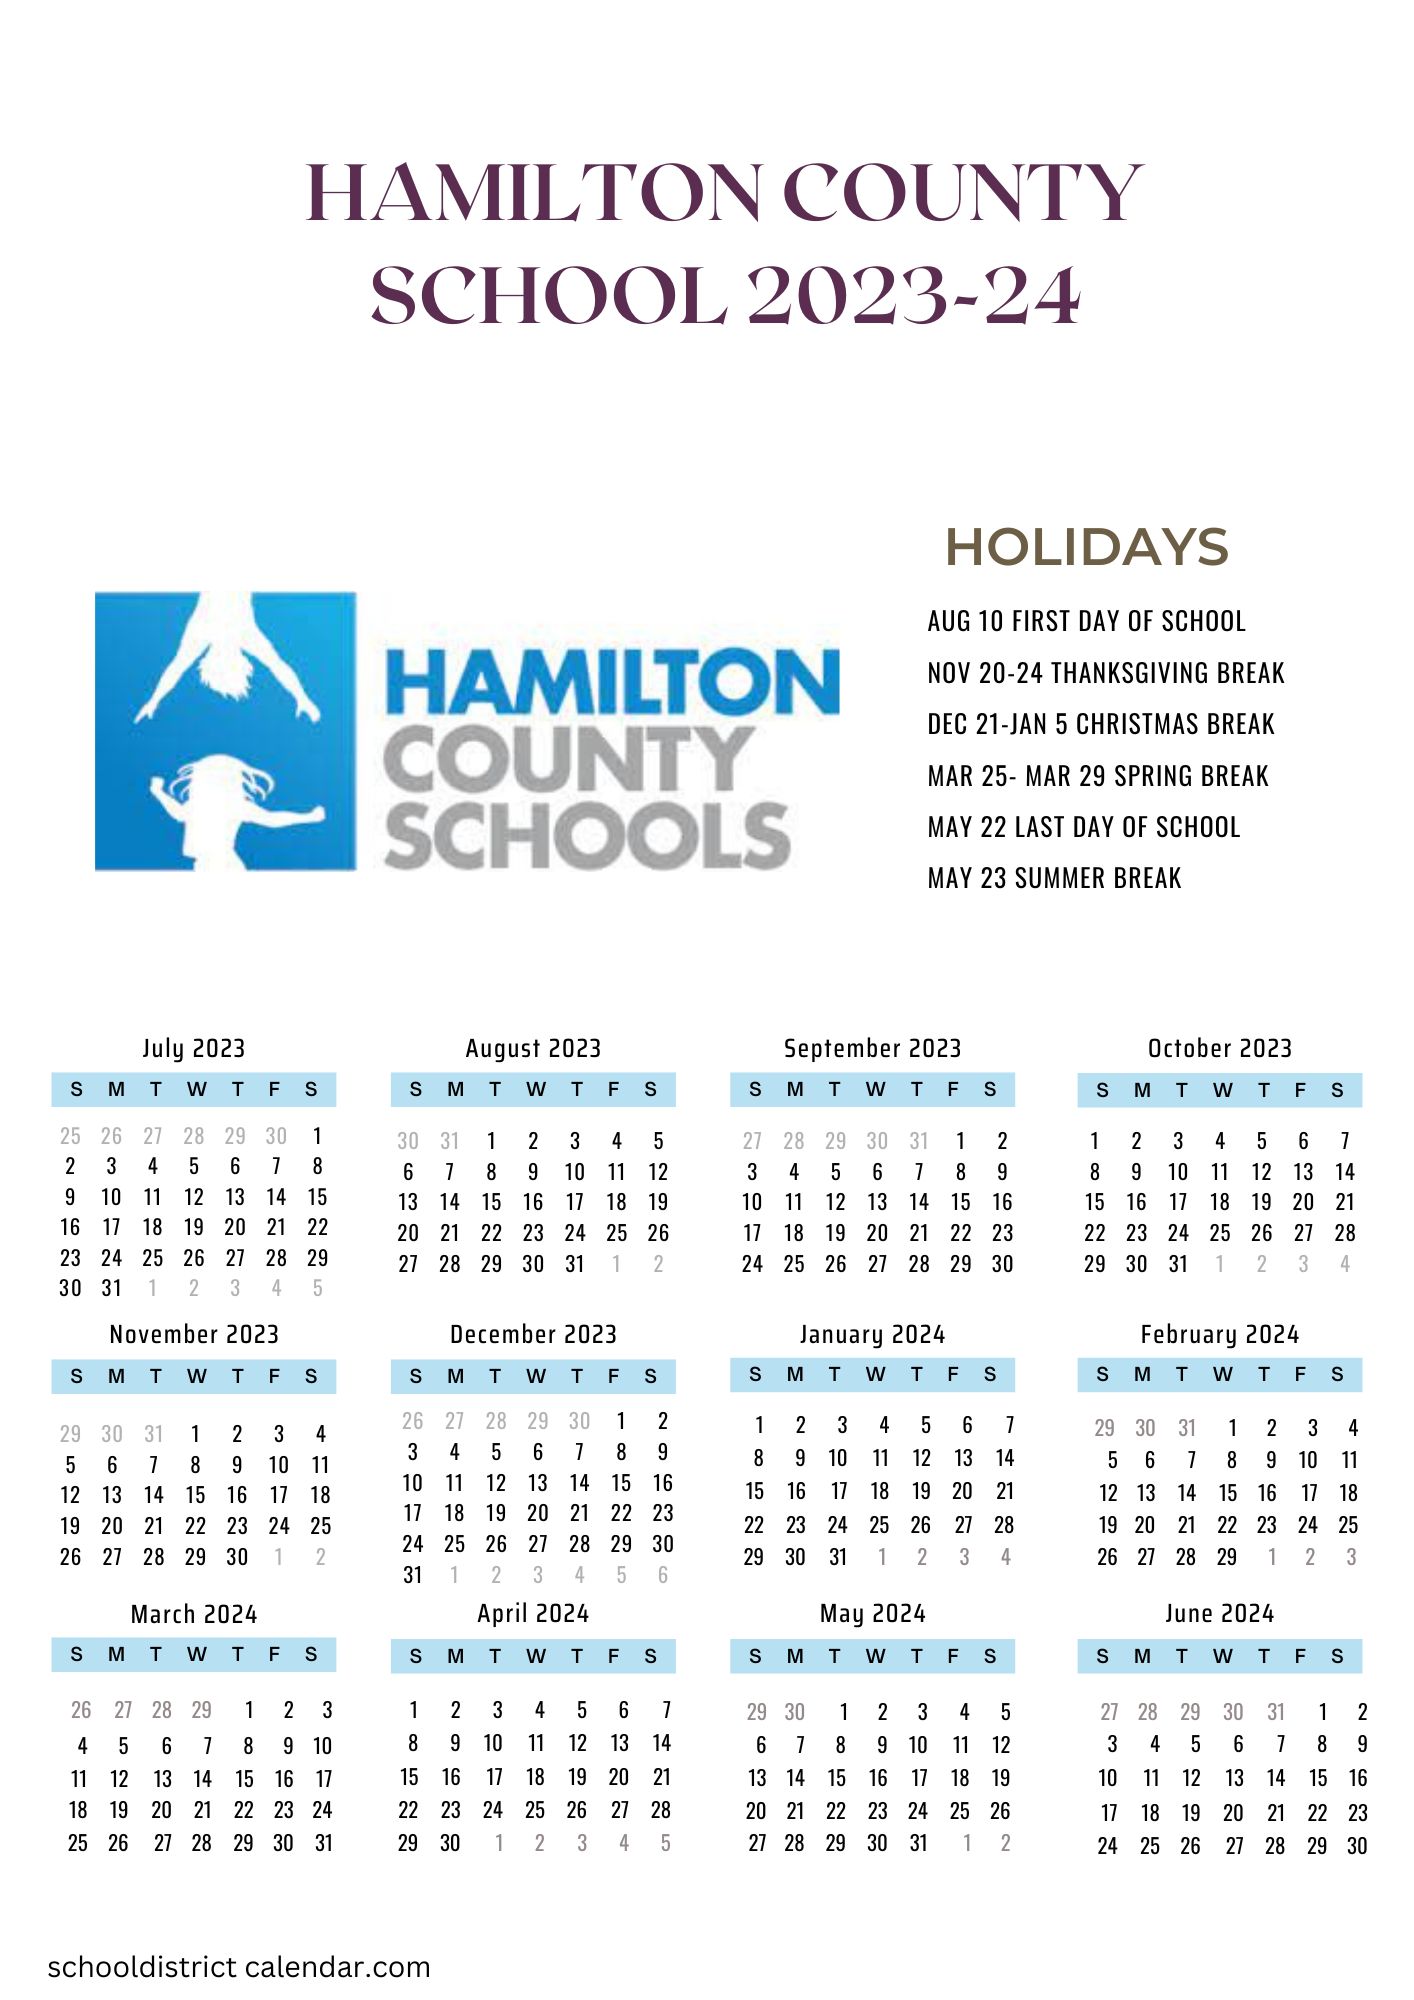 hamilton-county-schools-calendar-holidays-2023-2024